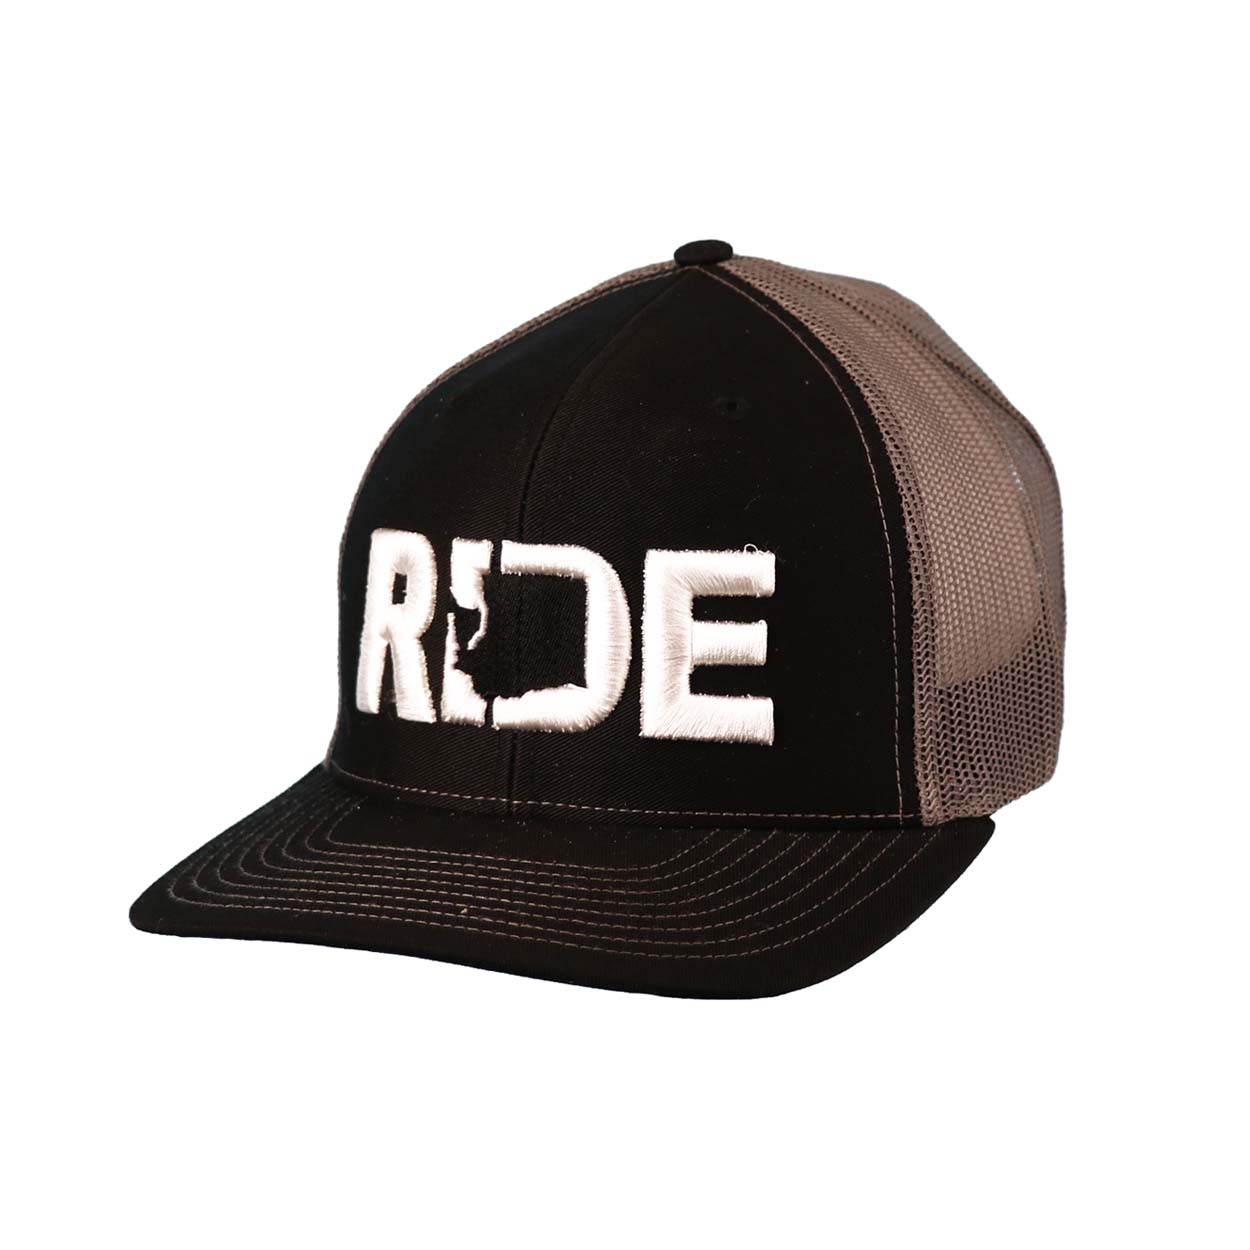 Ride Washington Classic Embroidered Snapback Trucker Hat Black/Charcoal